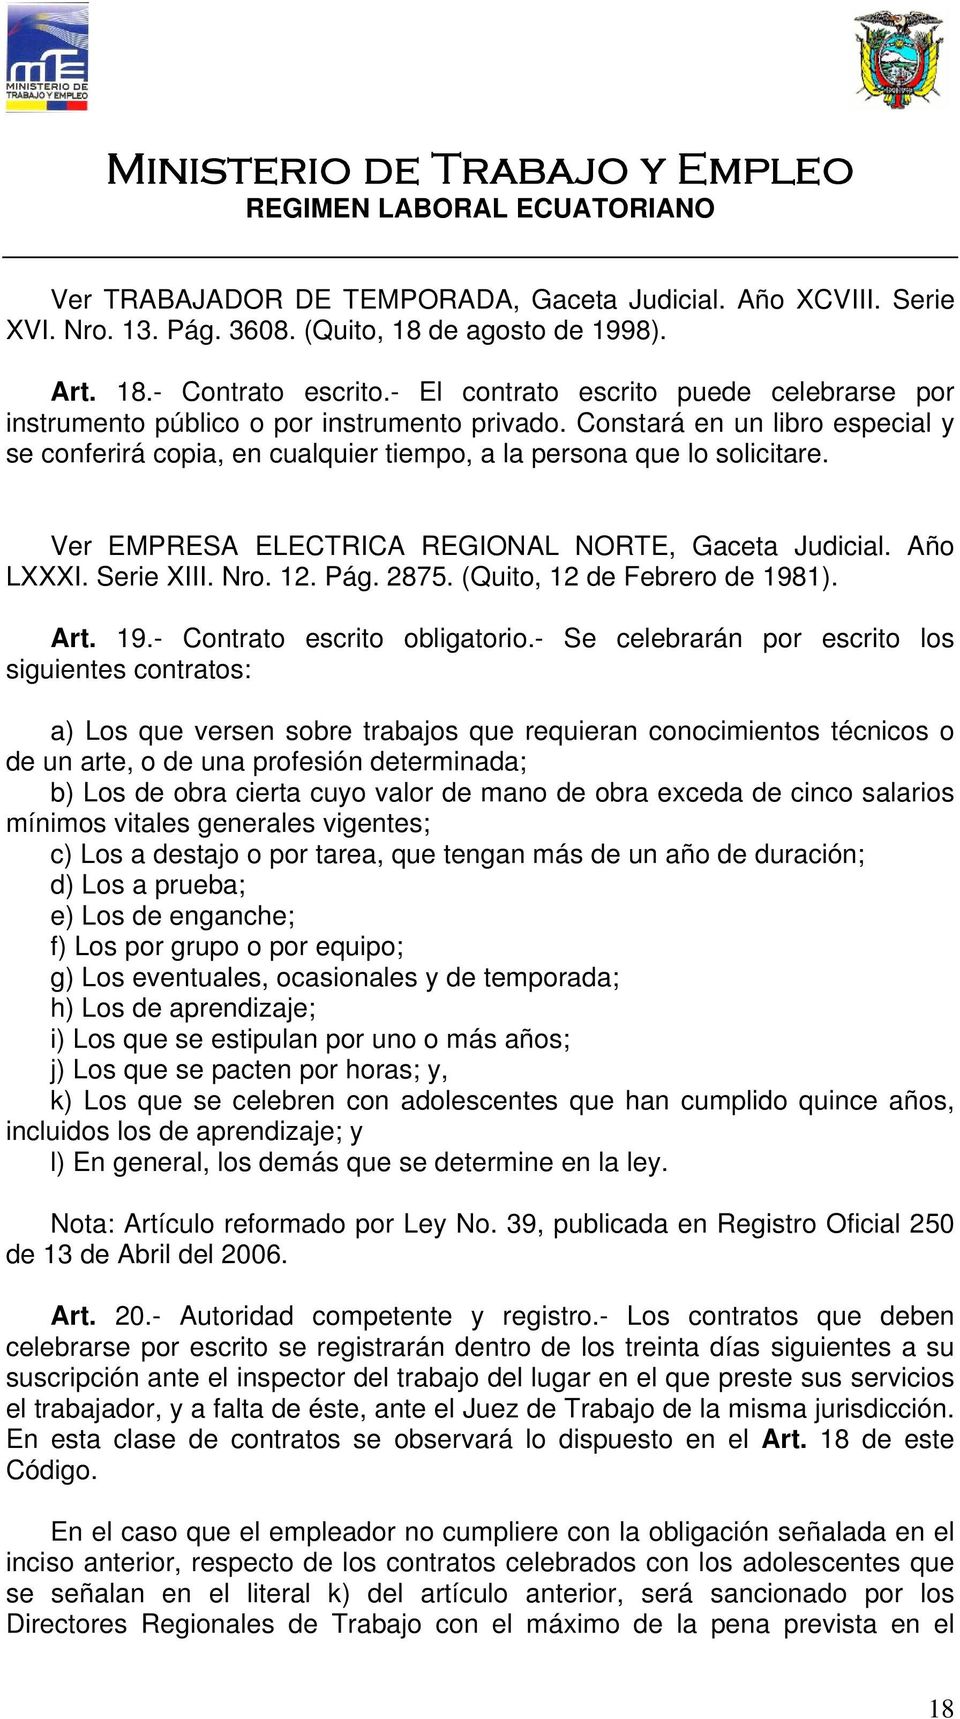 Ver EMPRESA ELECTRICA REGIONAL NORTE, Gaceta Judicial. Año LXXXI. Serie XIII. Nro. 12. Pág. 2875. (Quito, 12 de Febrero de 1981). Art. 19.- Contrato escrito obligatorio.